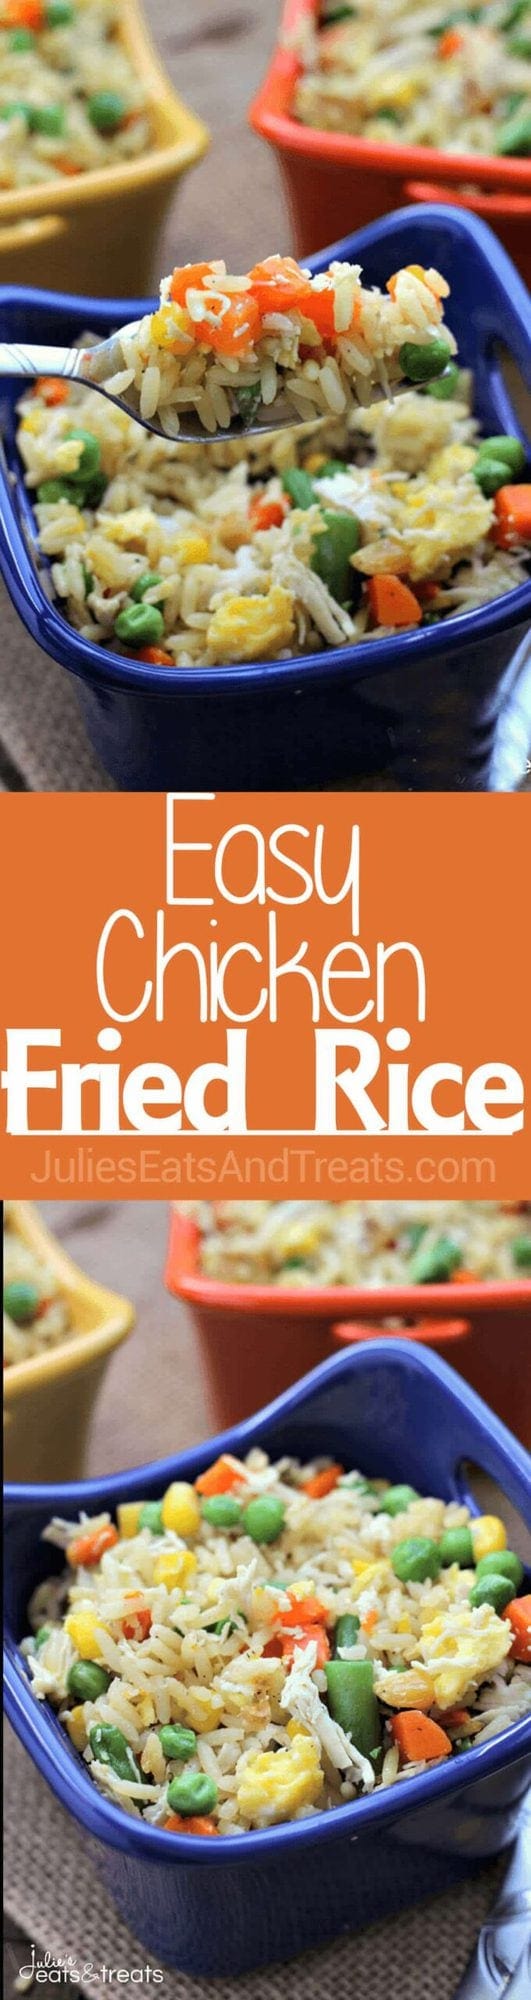 Easy Chicken Fried Rice - Julie's Eats & Treats